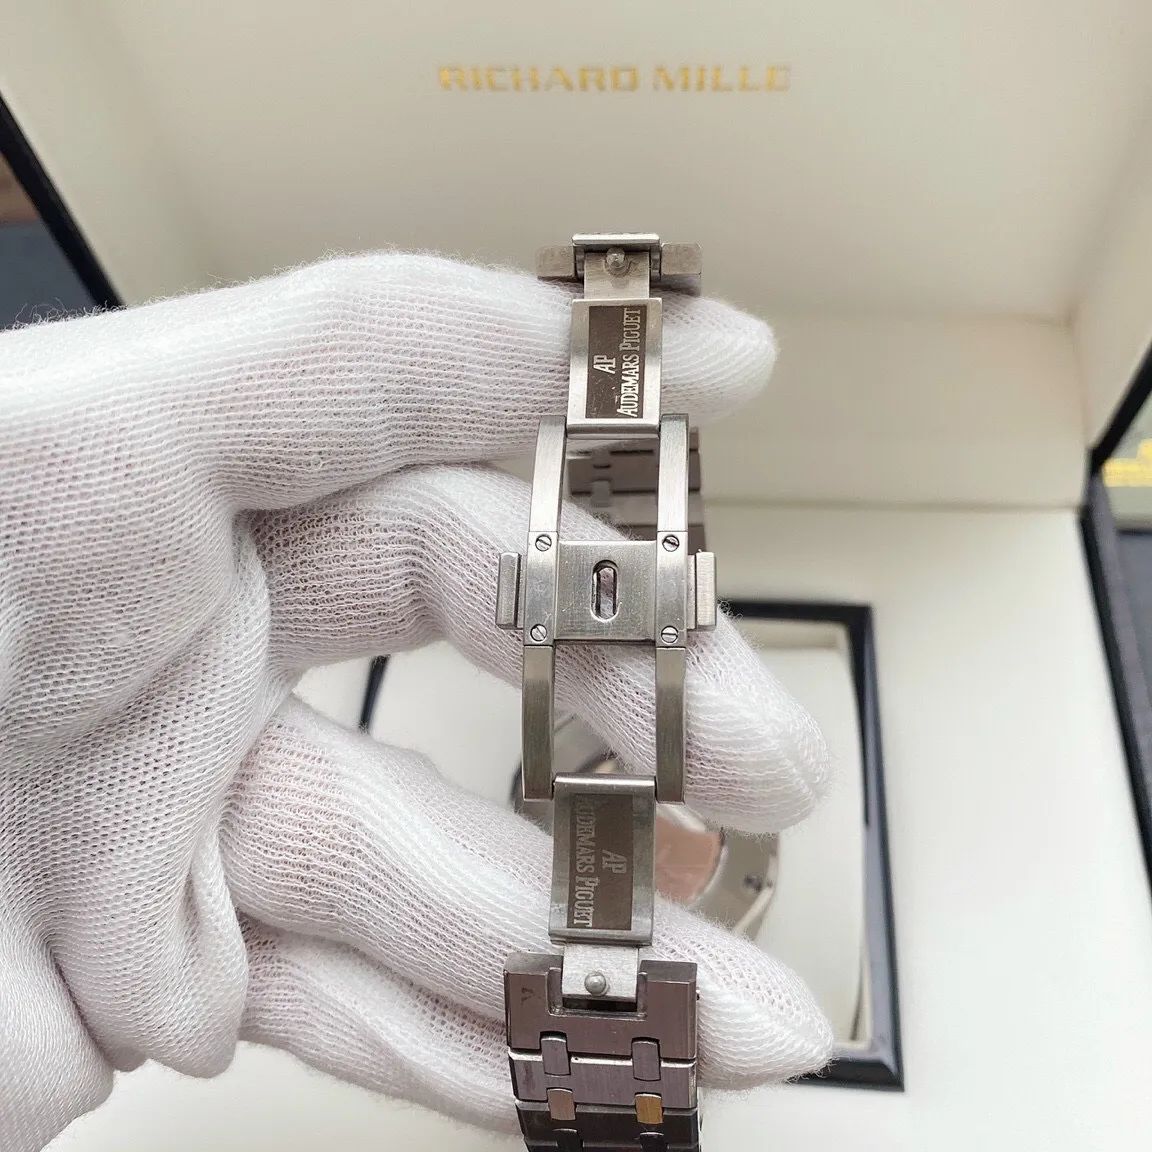 Audemars Piguet Royal Oak Watch With Two-Color Engine Dwatch